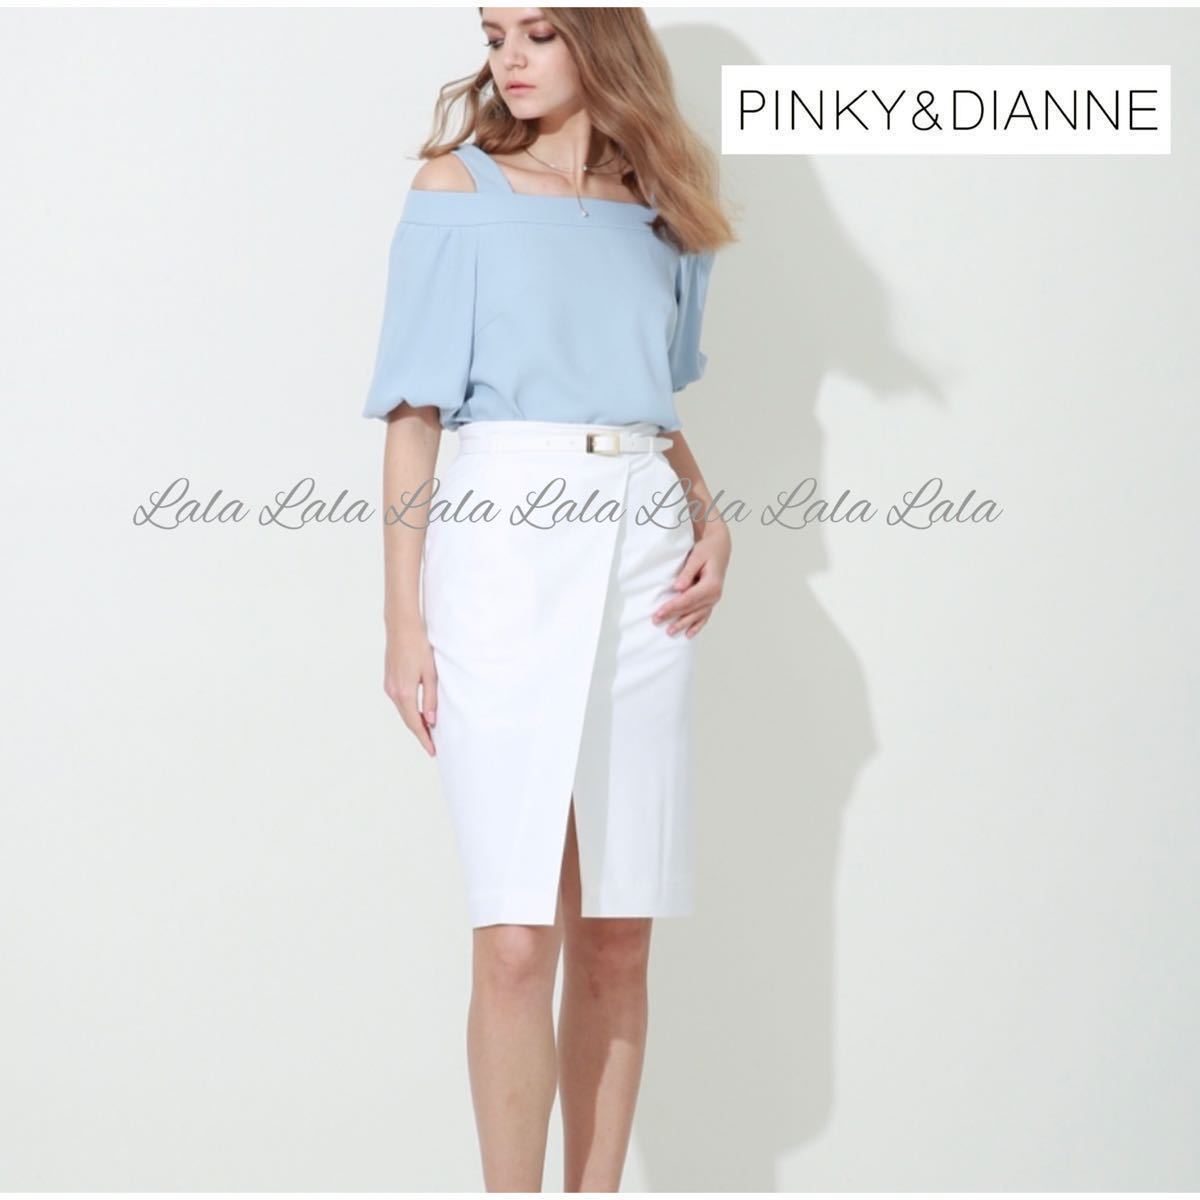 PINKY&DIANNE Pinky & Diane юбка узкая юбка ремень белый женский низ 